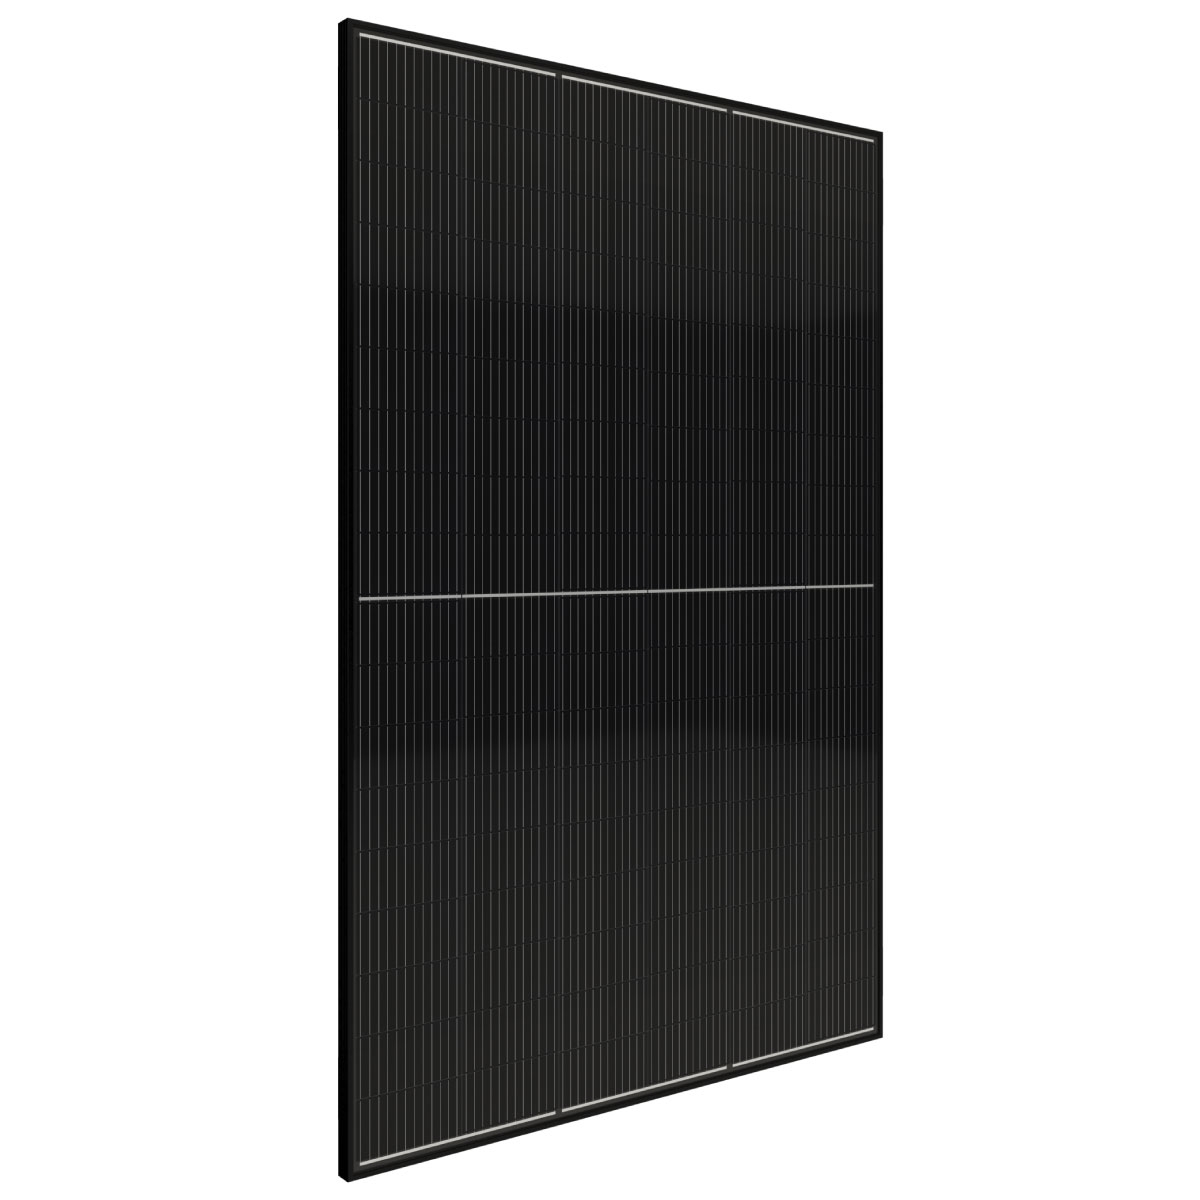 TommaTech 405Wp 108PM M10 Full Black Solar Panel